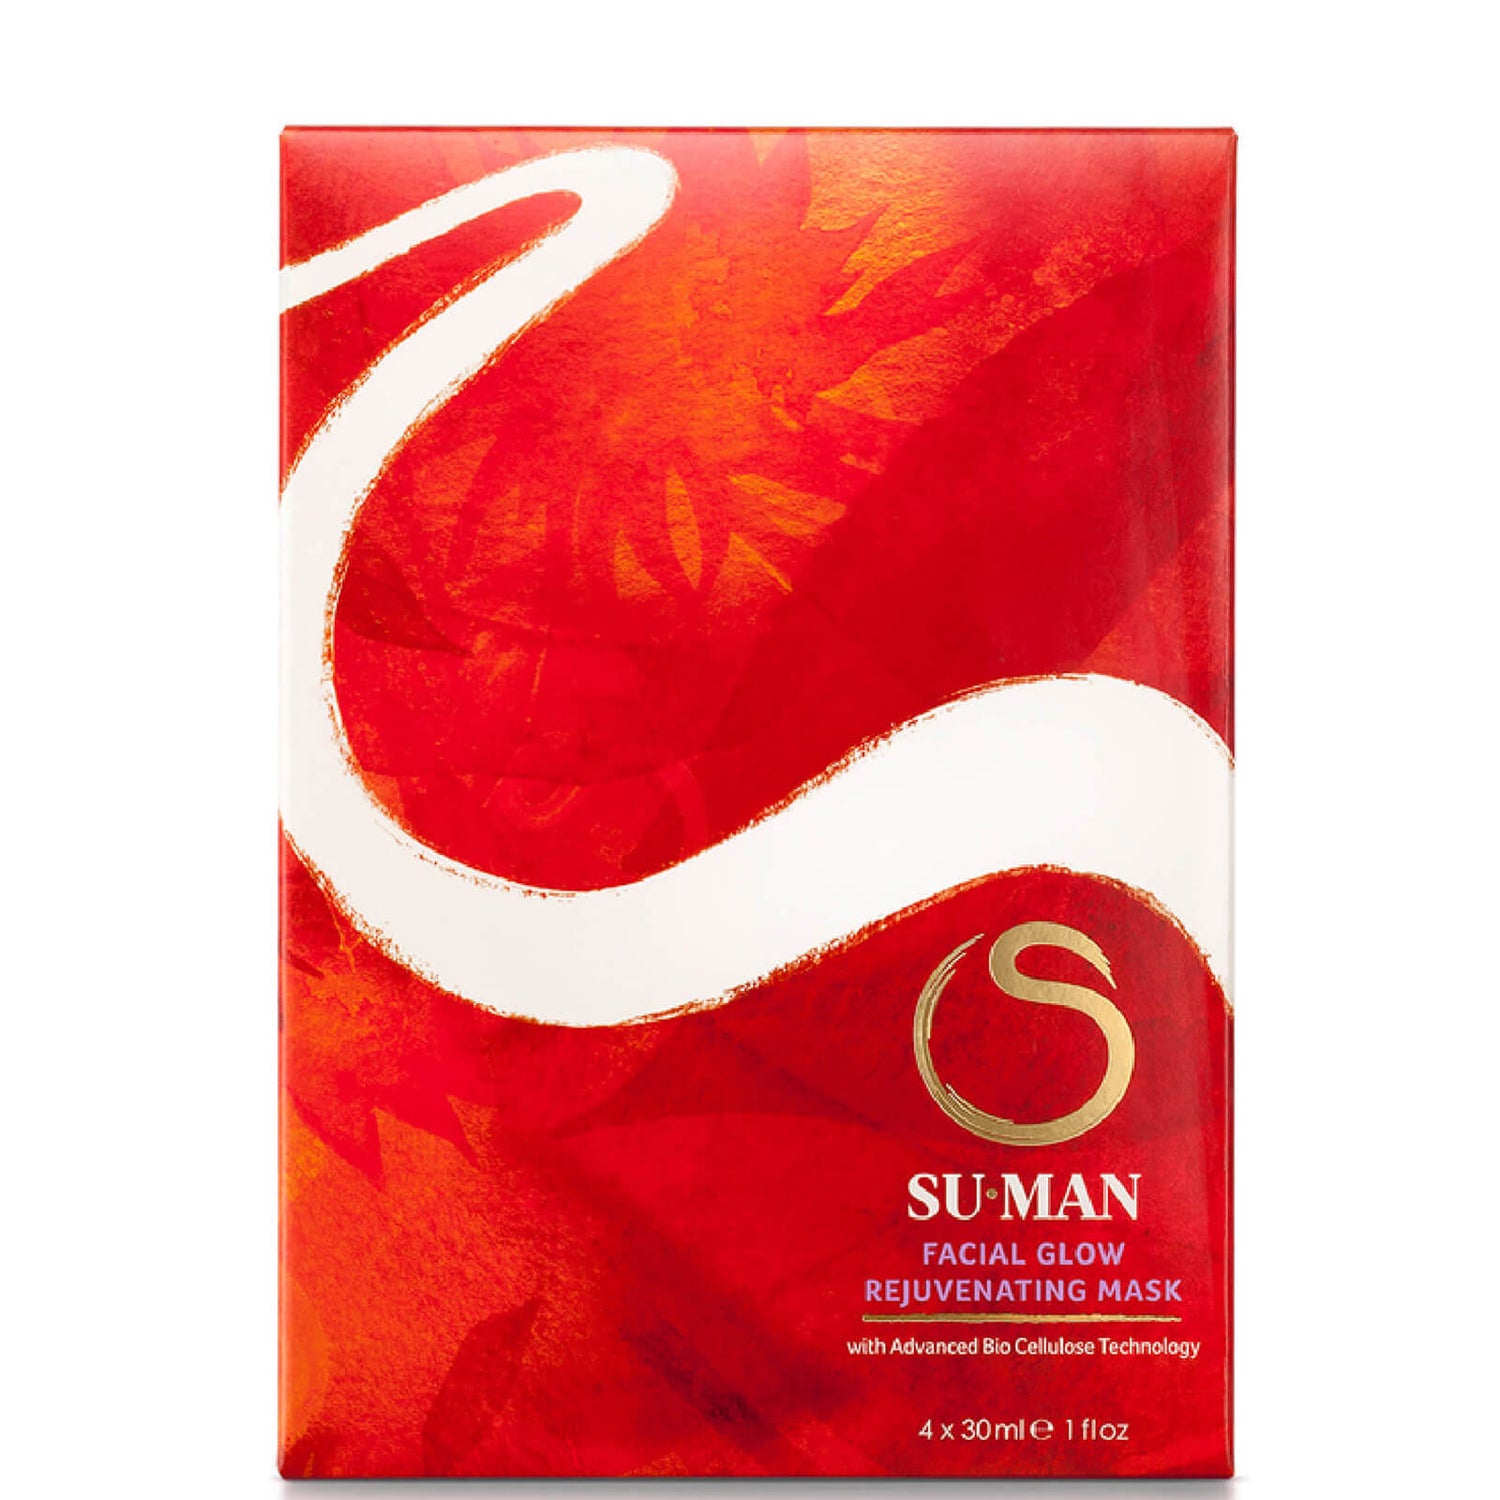 Su-Man 焕活美肌面膜 - 4 片 x 30ml